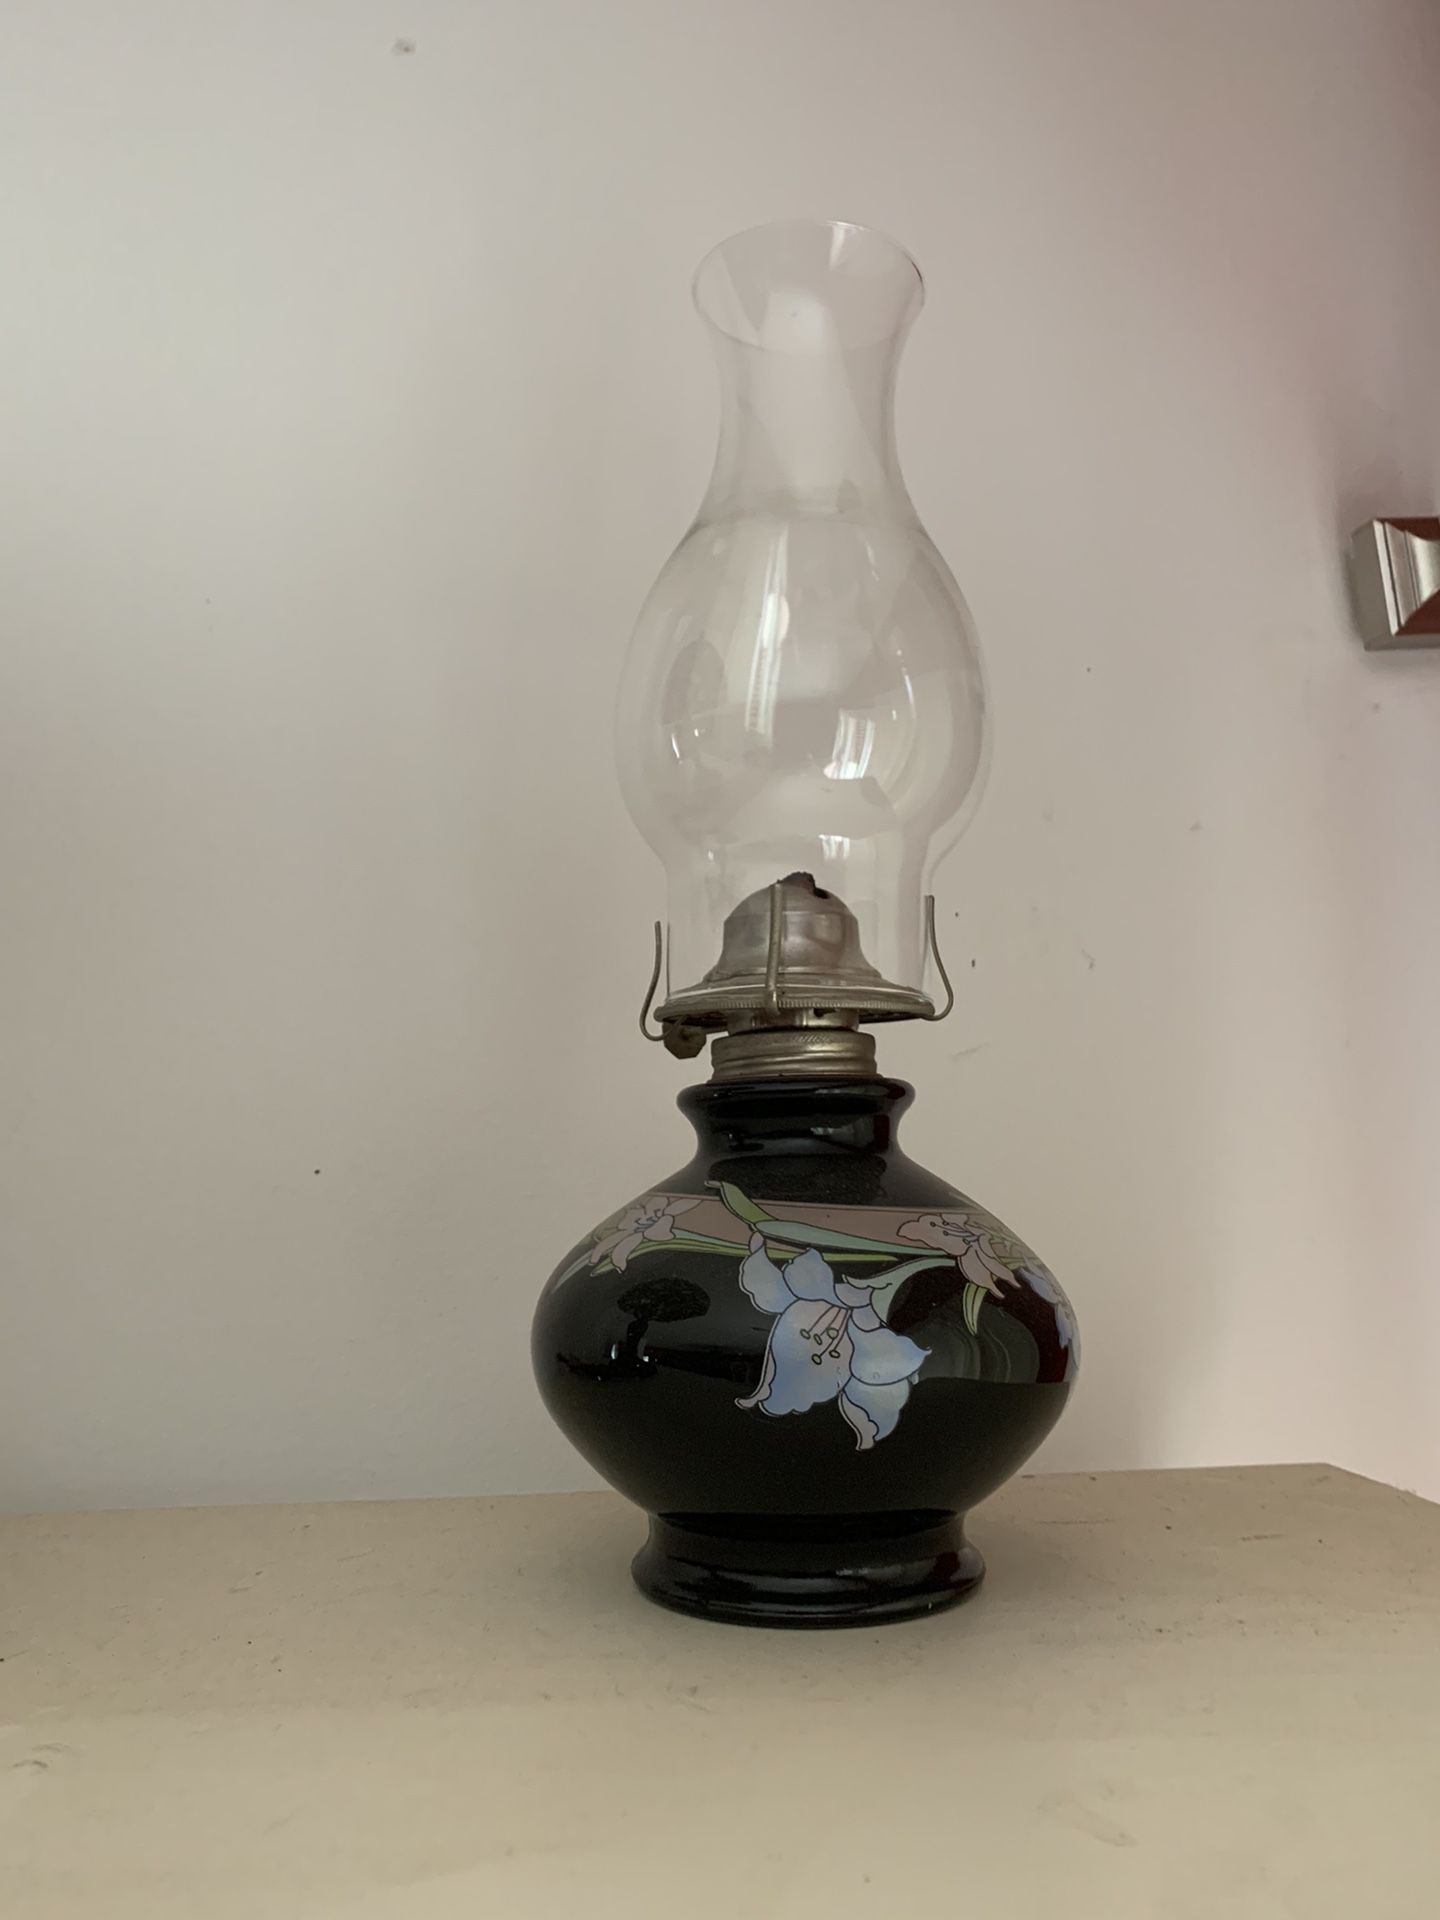  Vintage Kaadan Oil Lamps (2)